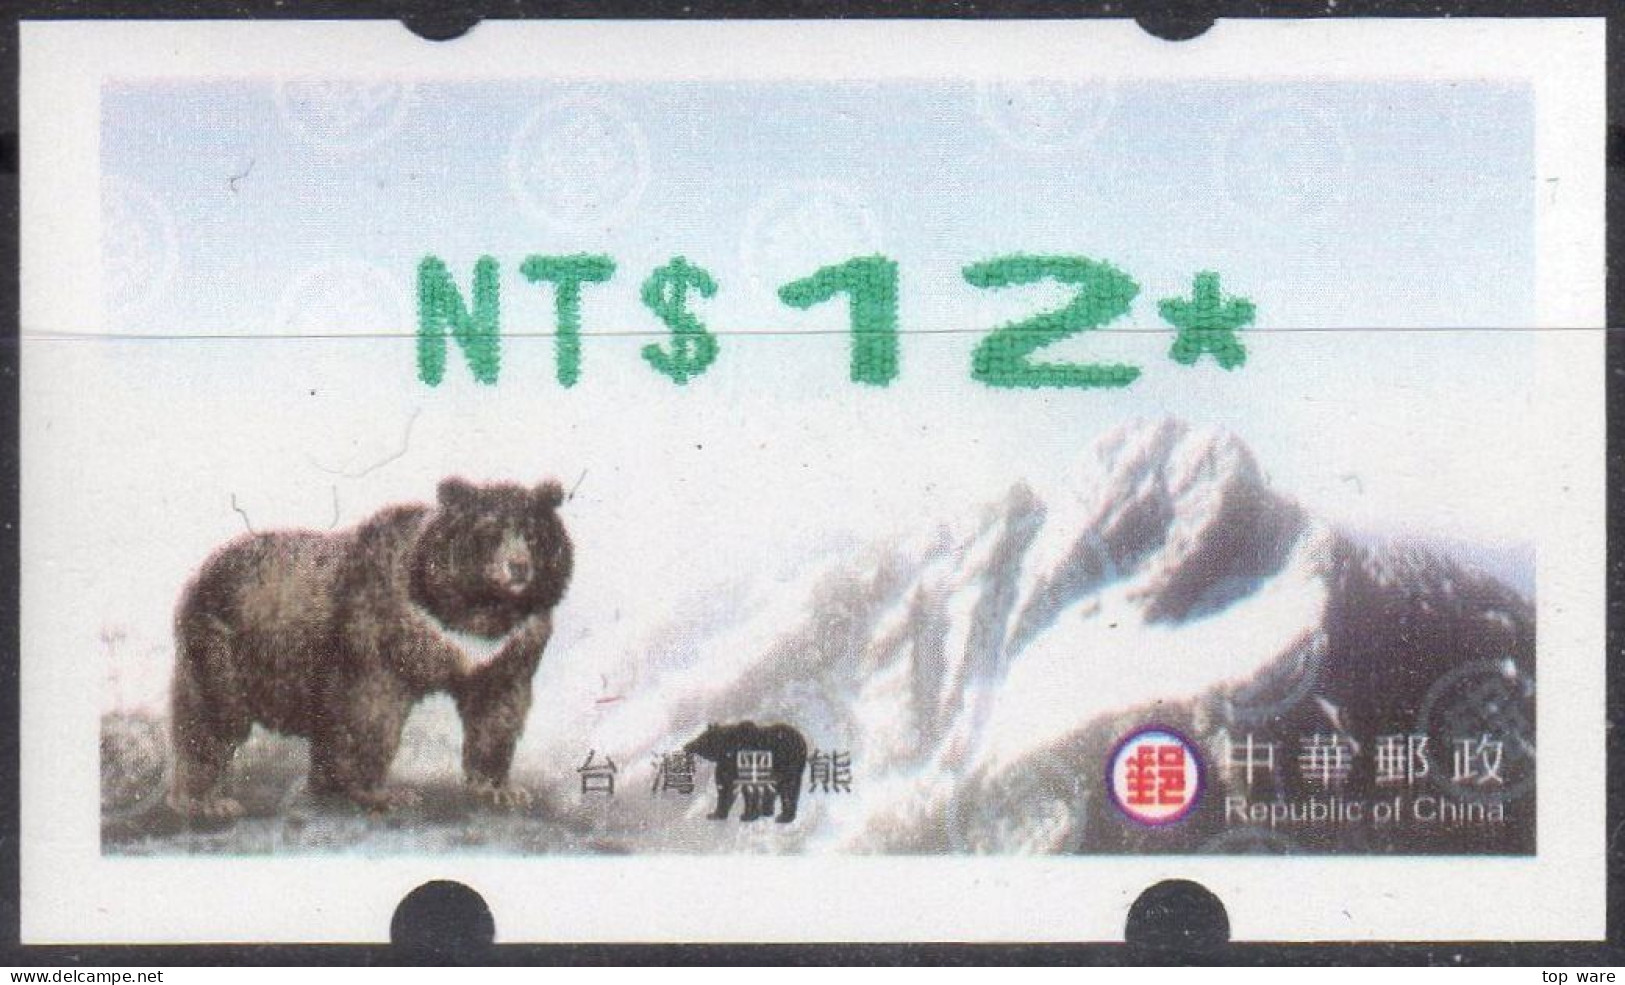 2004 Automatenmarken China Taiwan Black Bear MiNr.5.1 Green ATM NT$12 MNH Nagler Kiosk Etiquetas - Distribuidores